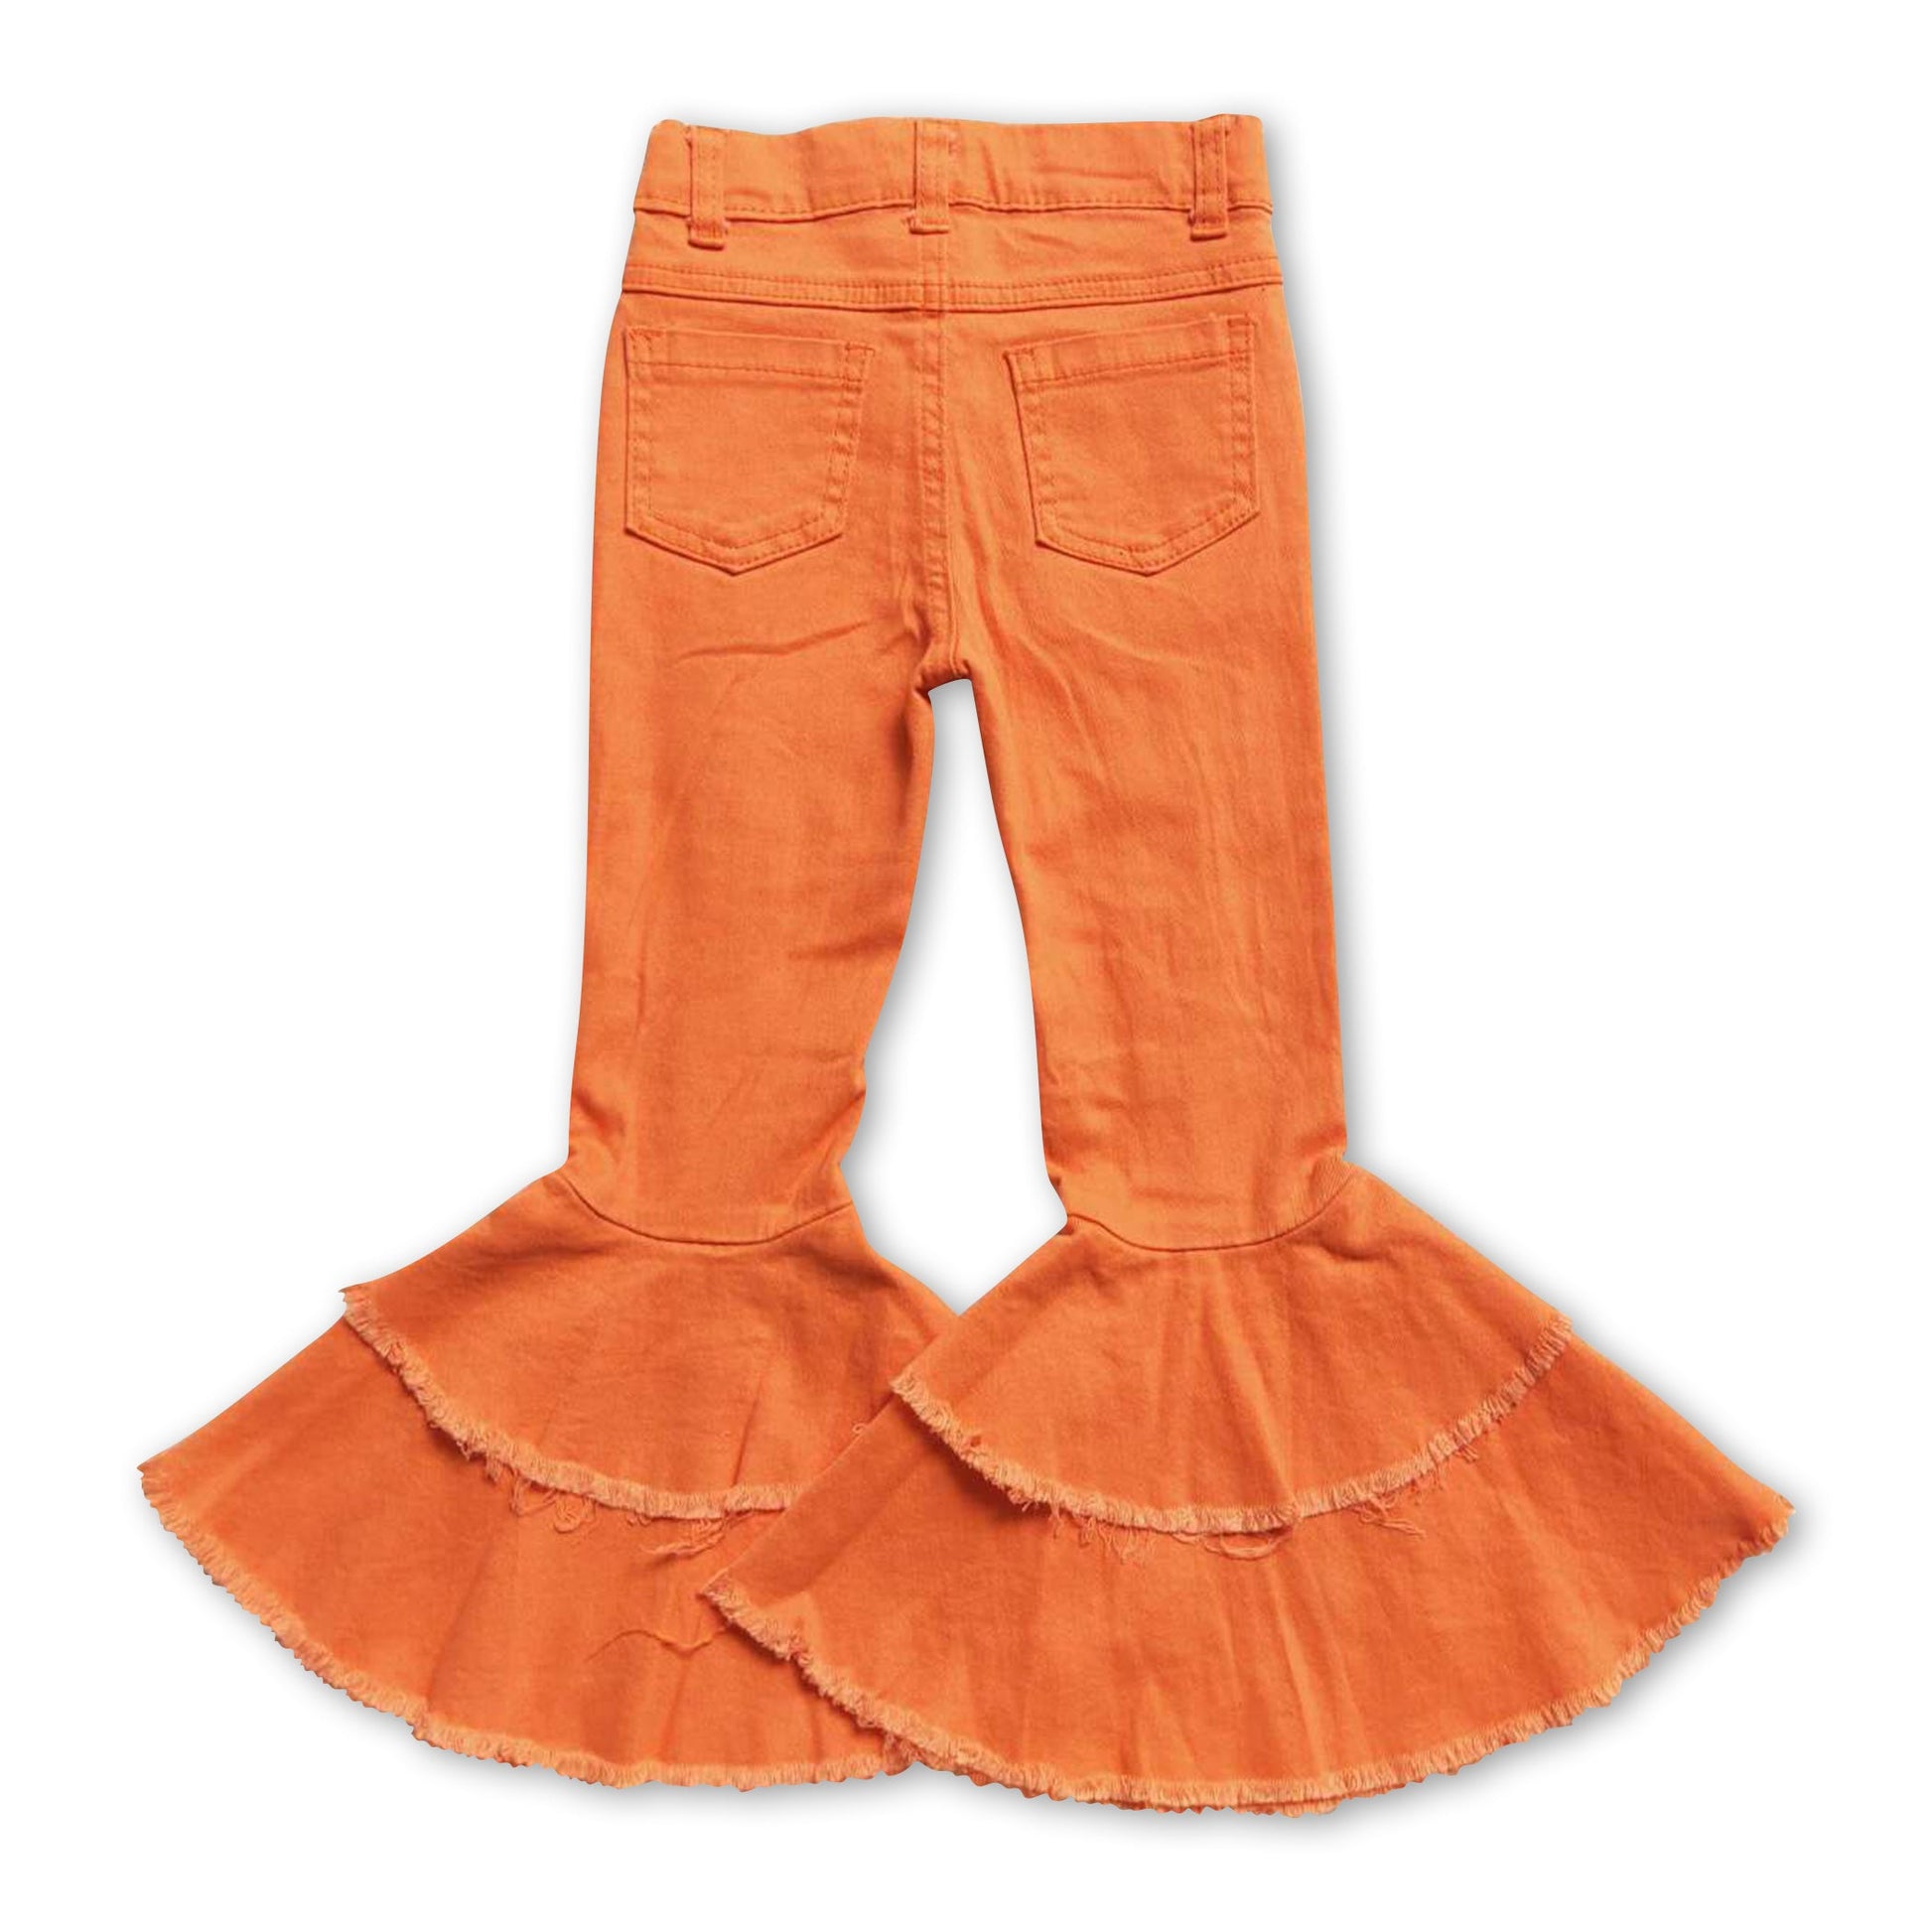 Orange distressed ruffle bell bottom pants kids girls jeans